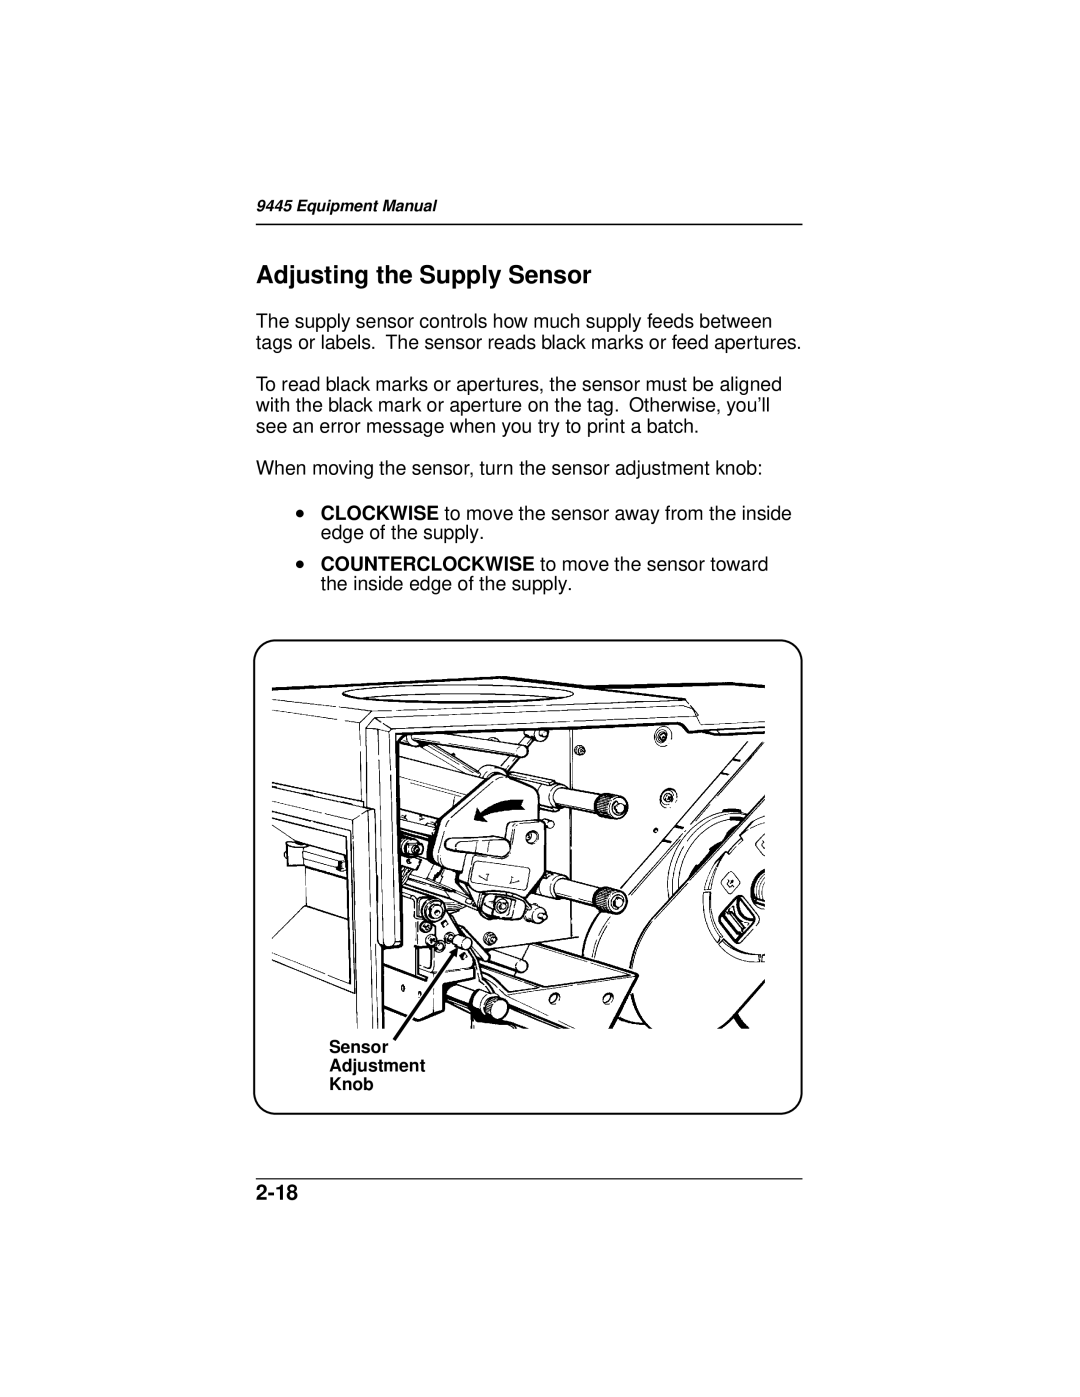 Paxar 9445 manual Adjusting the Supply Sensor, 2-18 